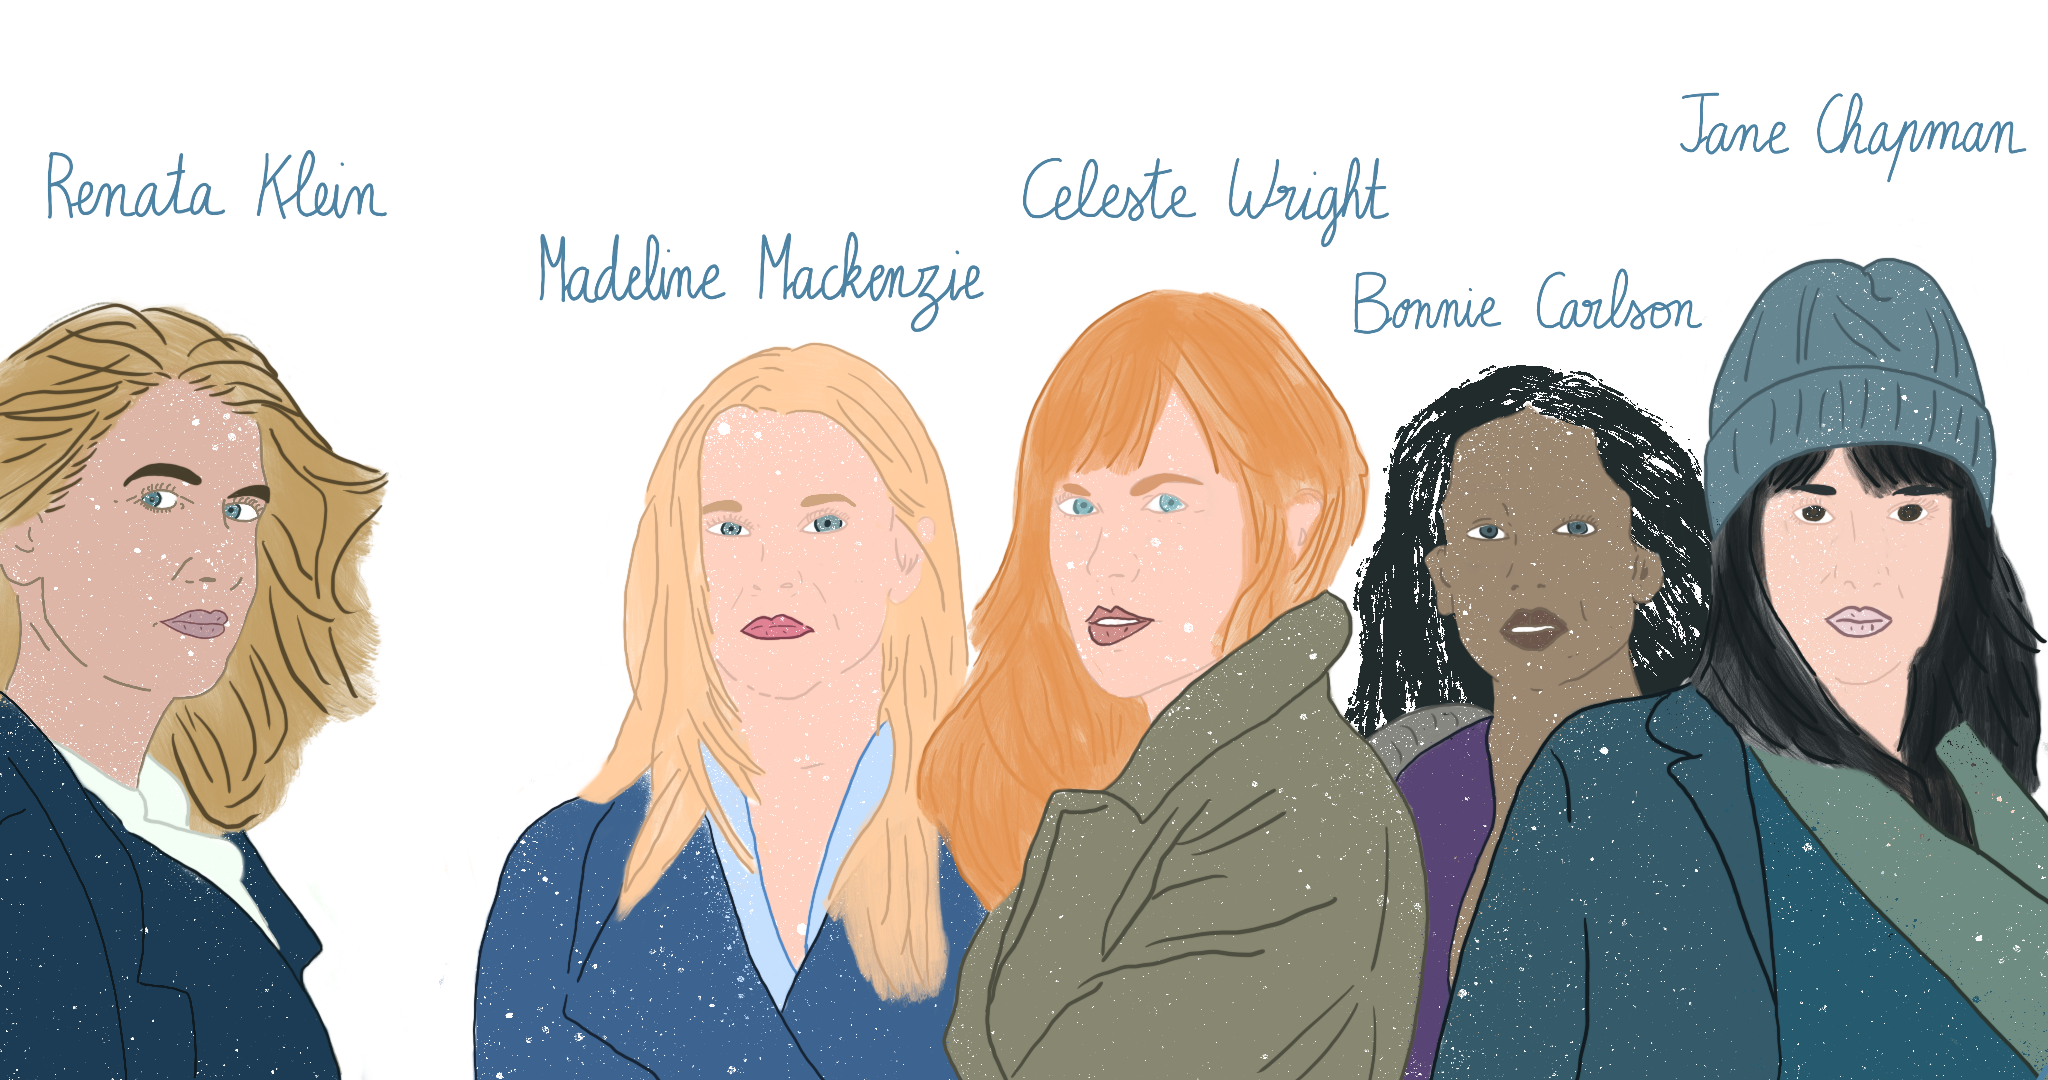 Big little lies - Renata keen - Madeline Mackenzie - Celeste wright - bonnie Carlson - Jane chapman - feminism intersectionnel